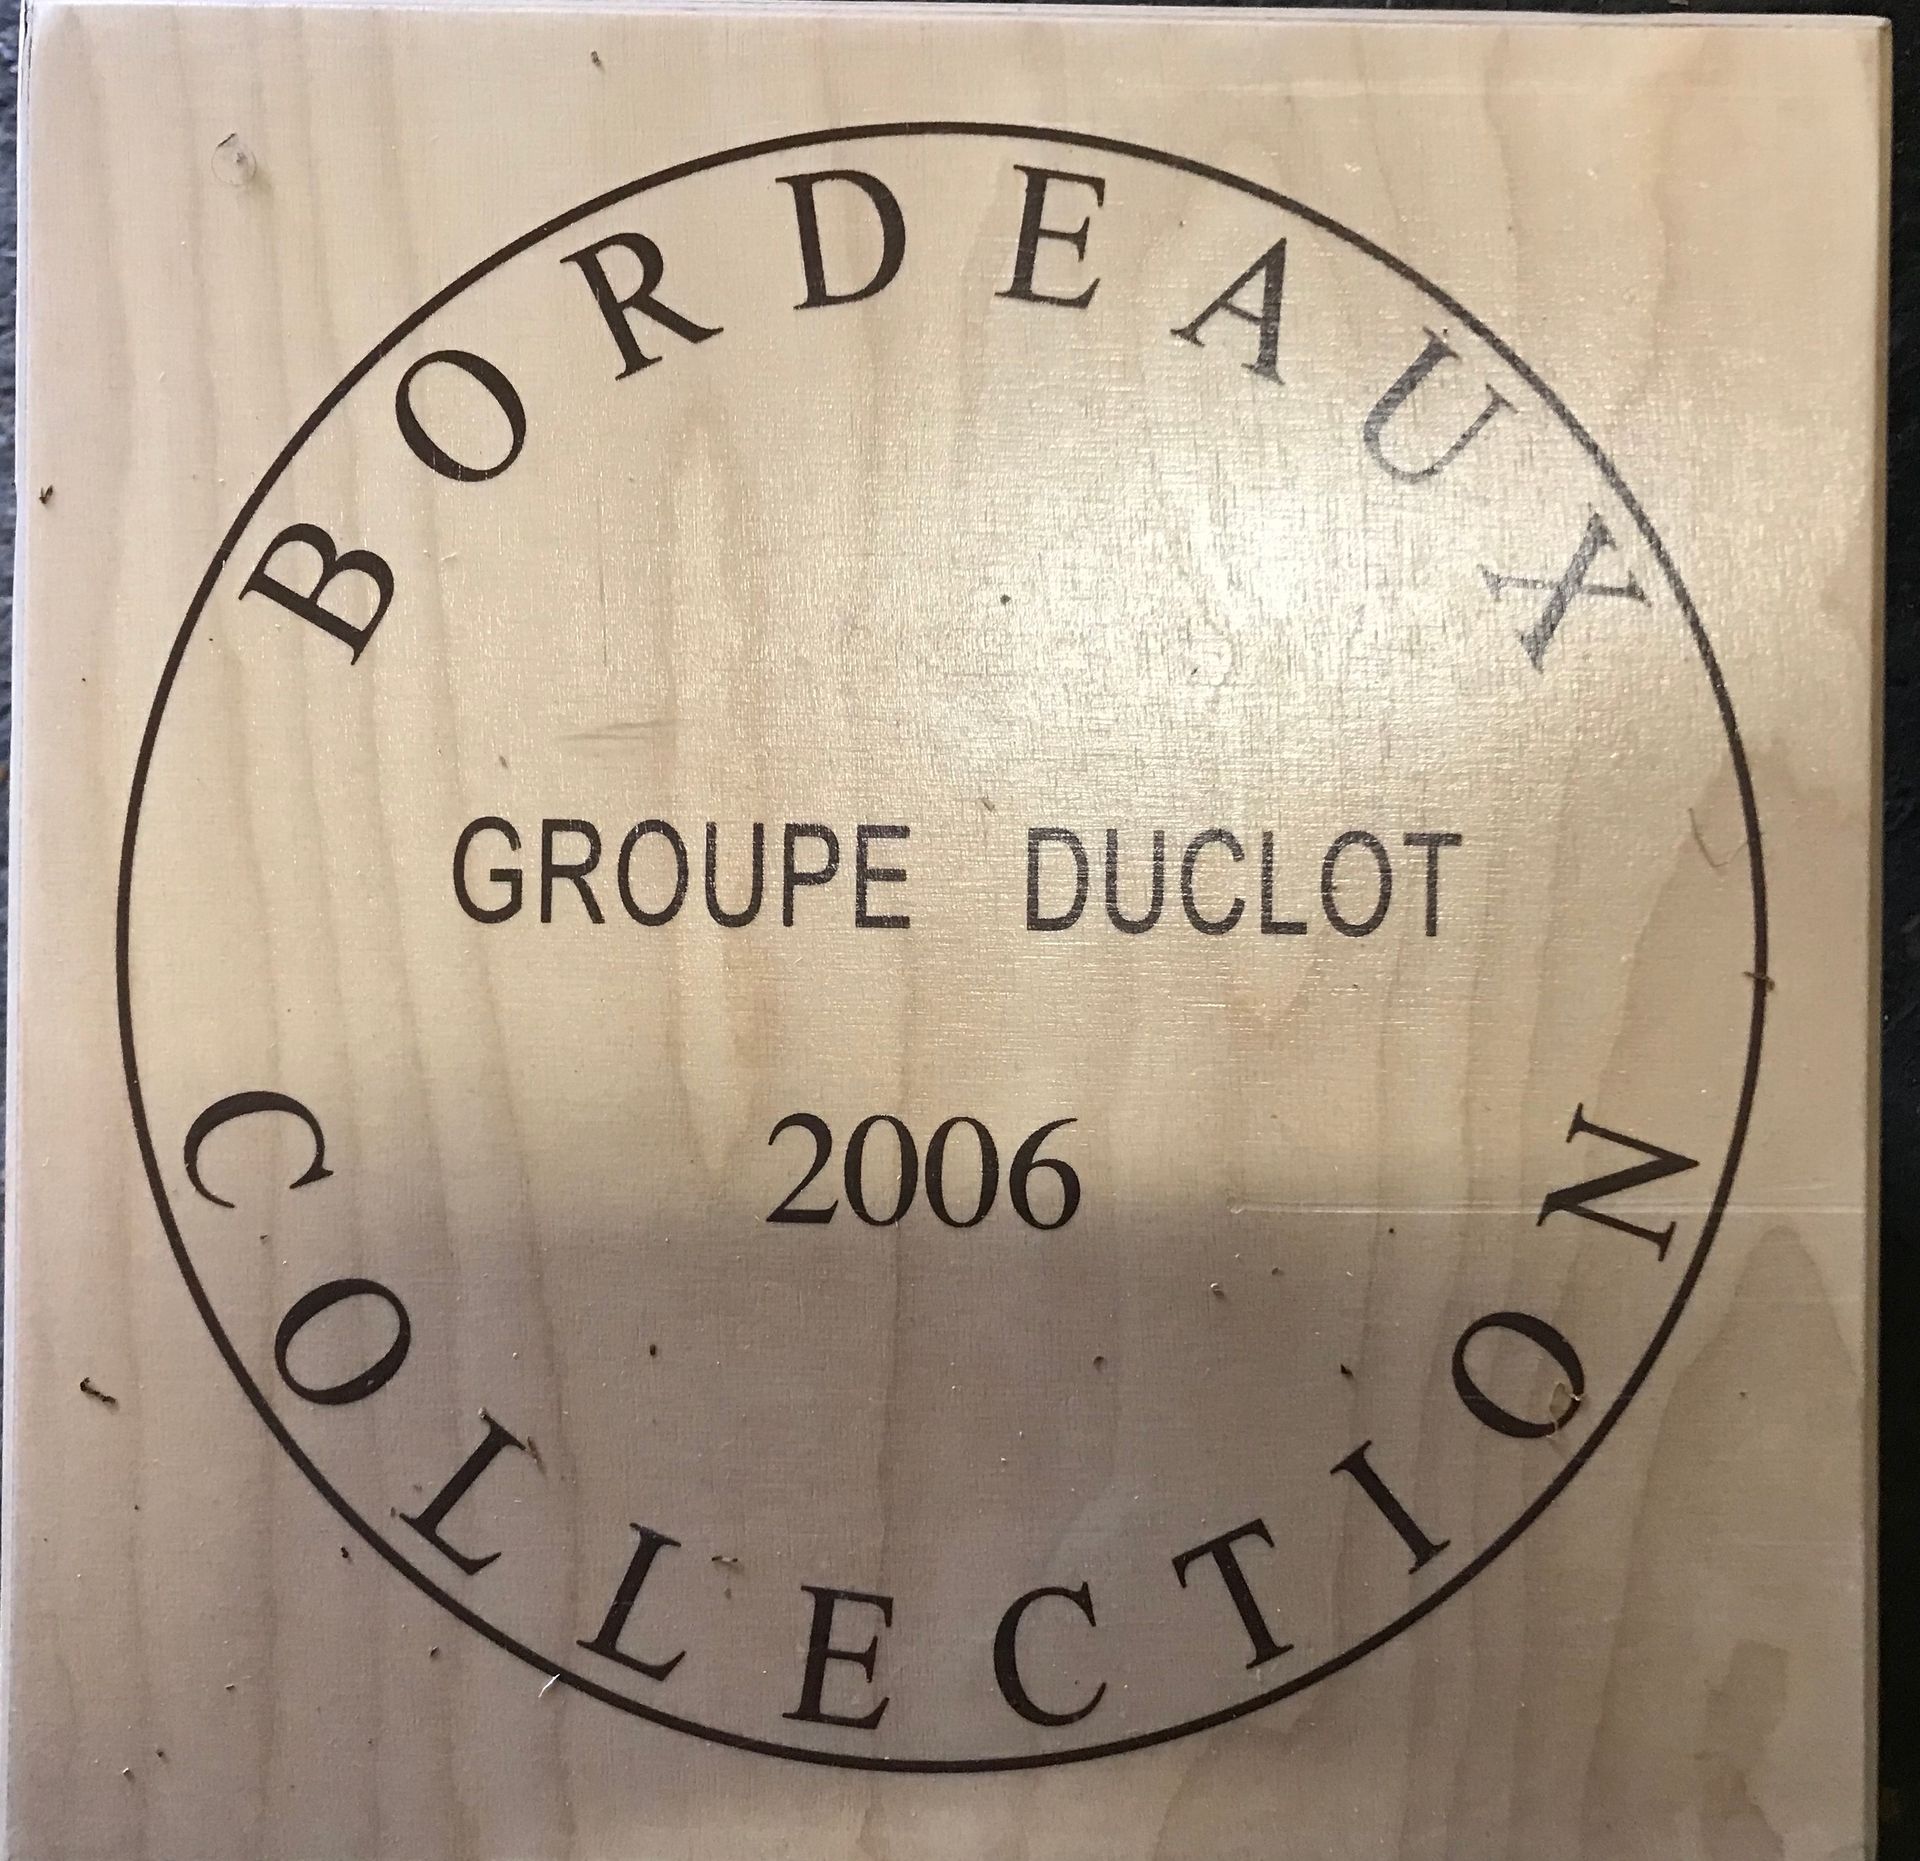 Null 1箱PANACHEE DUCLOT 2006包括。

1 Blle Château PETRUS (Pomerol) 2006年

1瓶 MOUTON&hellip;